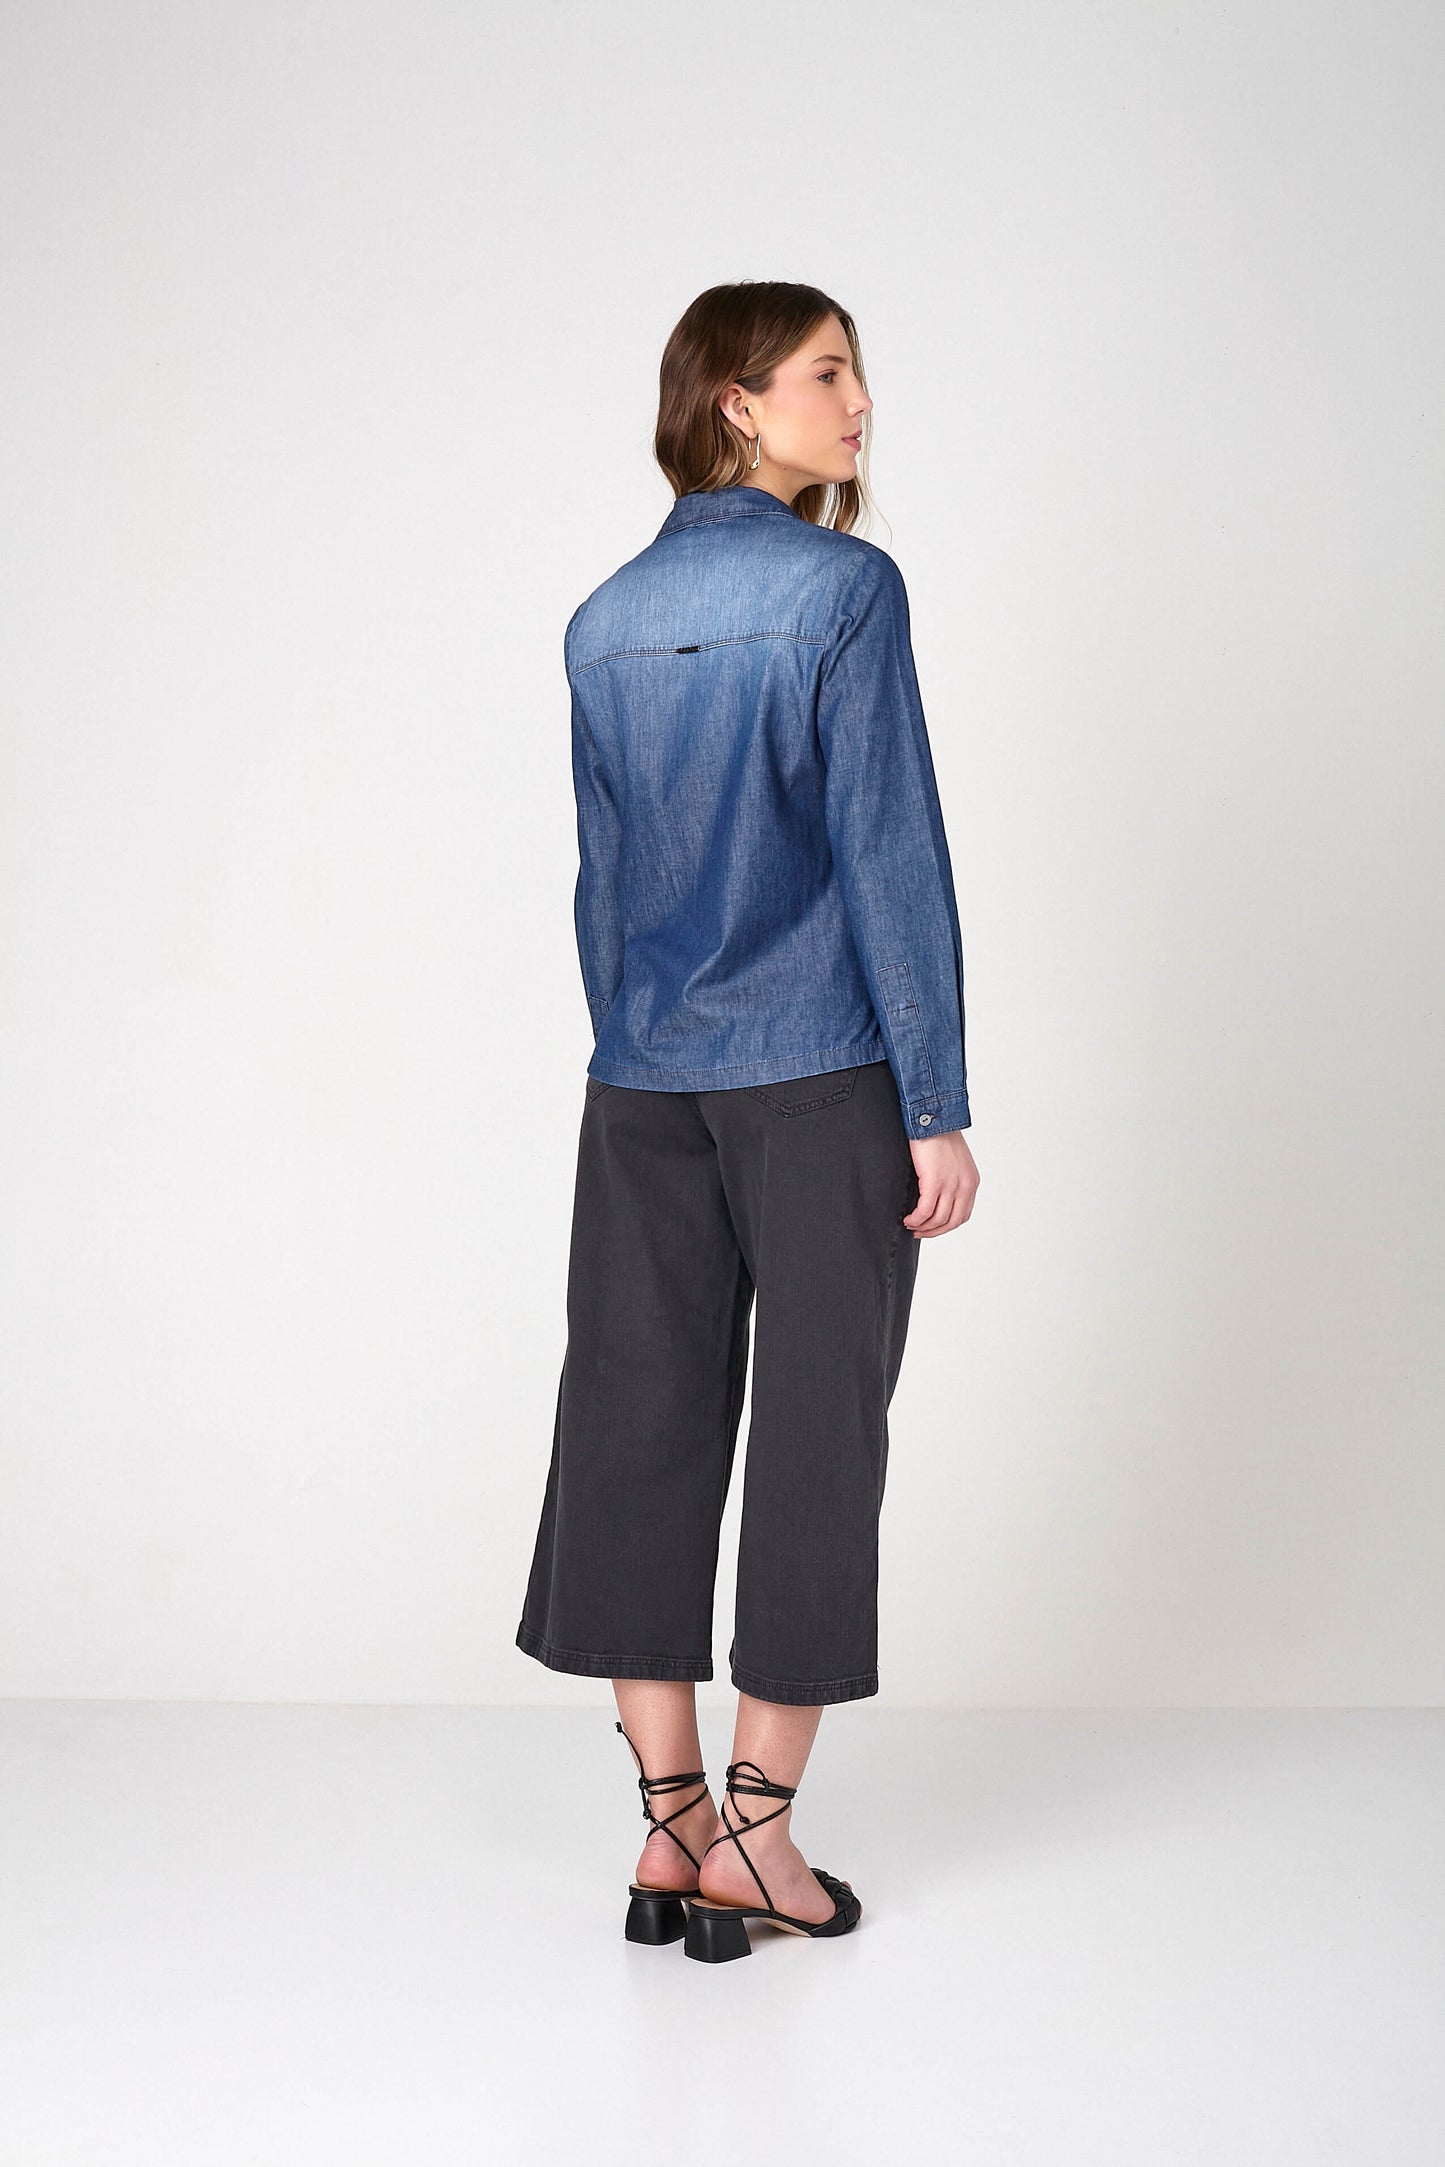 camisa jeans manga longa com bolso bordado